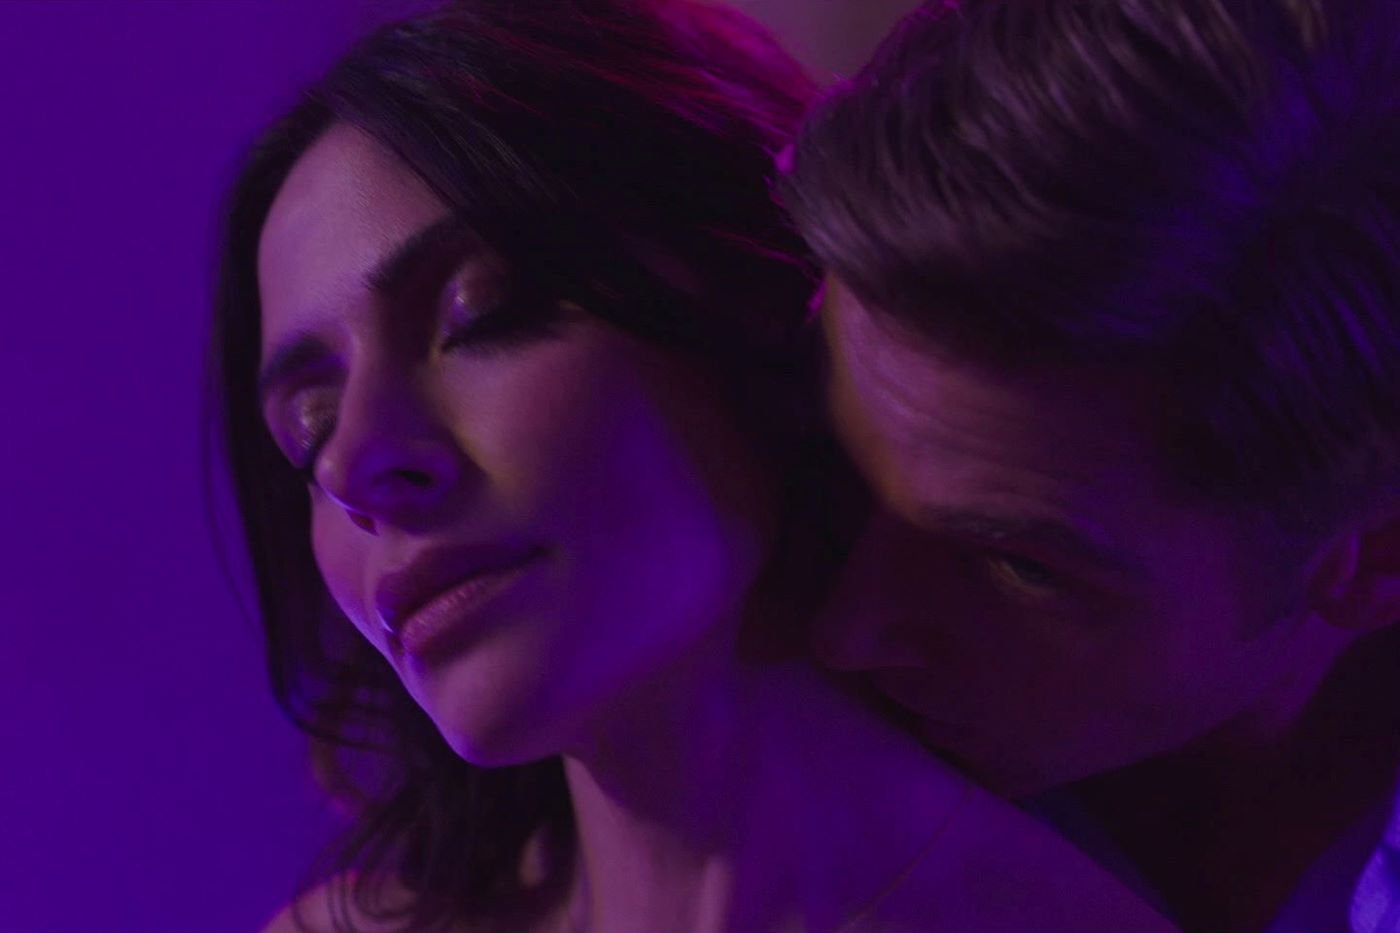 A scene from Sex/Life with Adam Demos kissing Sarah Shahi's neck.